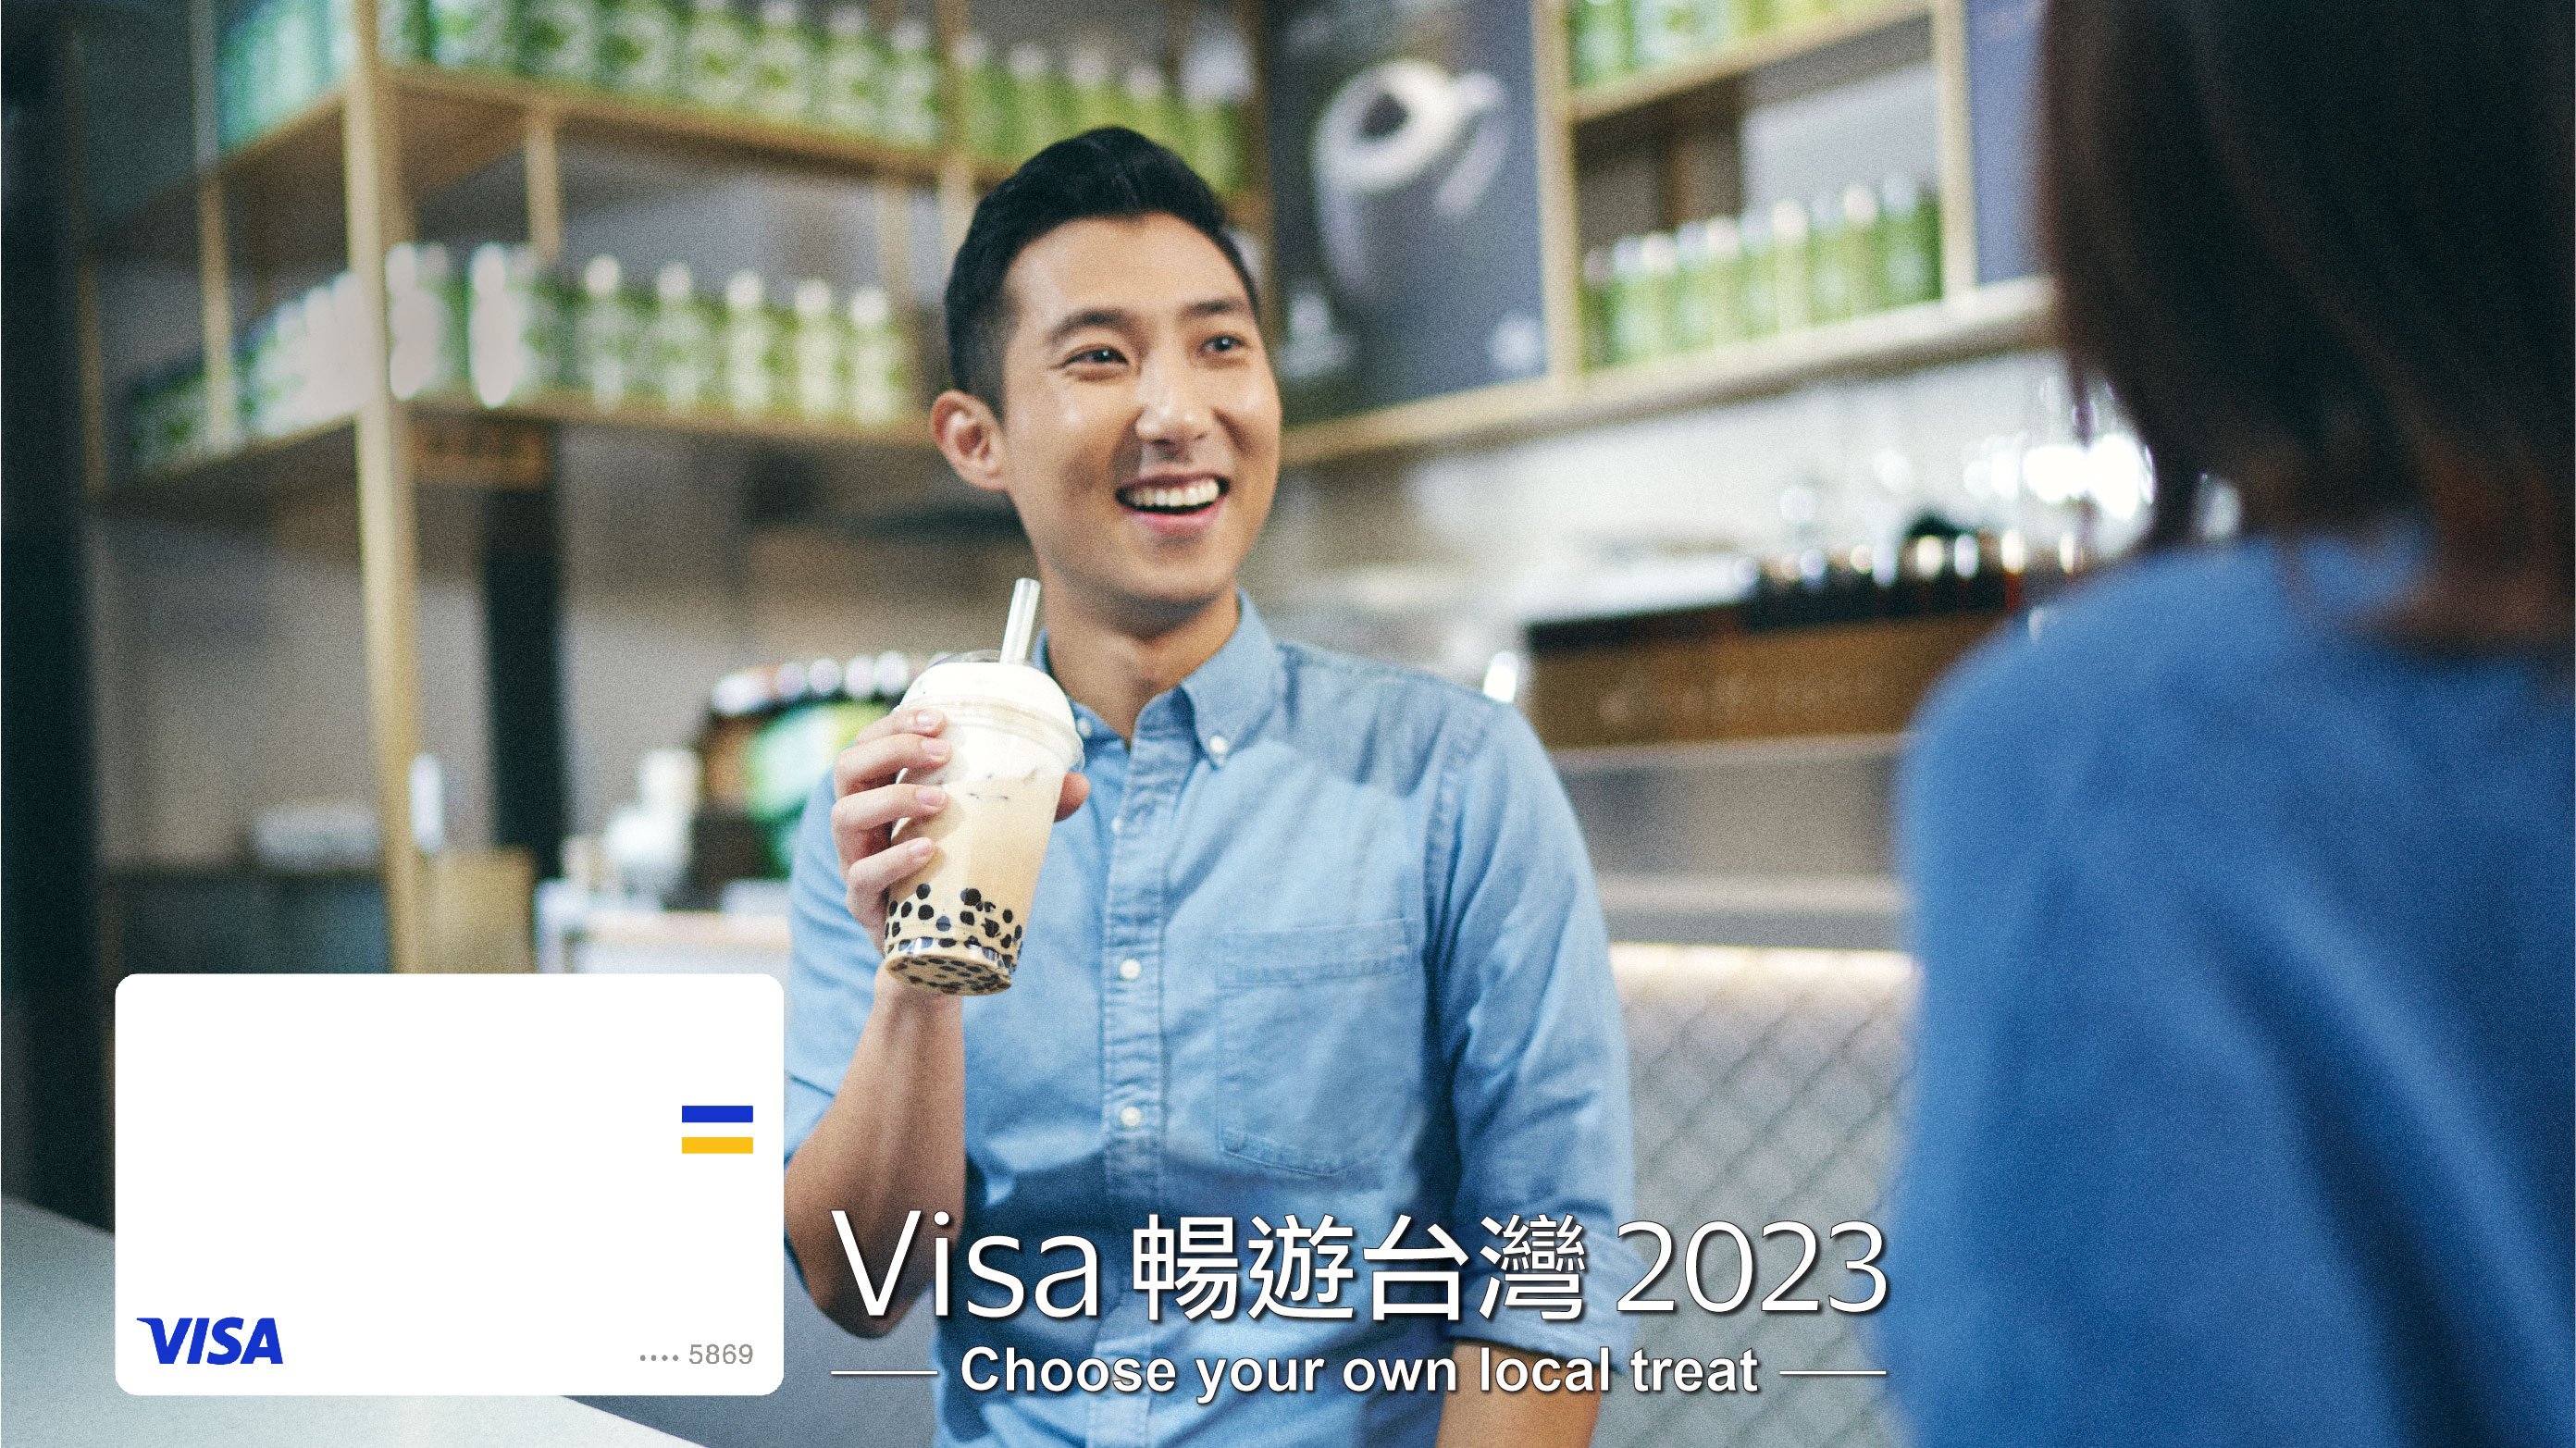 2023 VISA 信用卡外國旅客用餐 95 折優惠